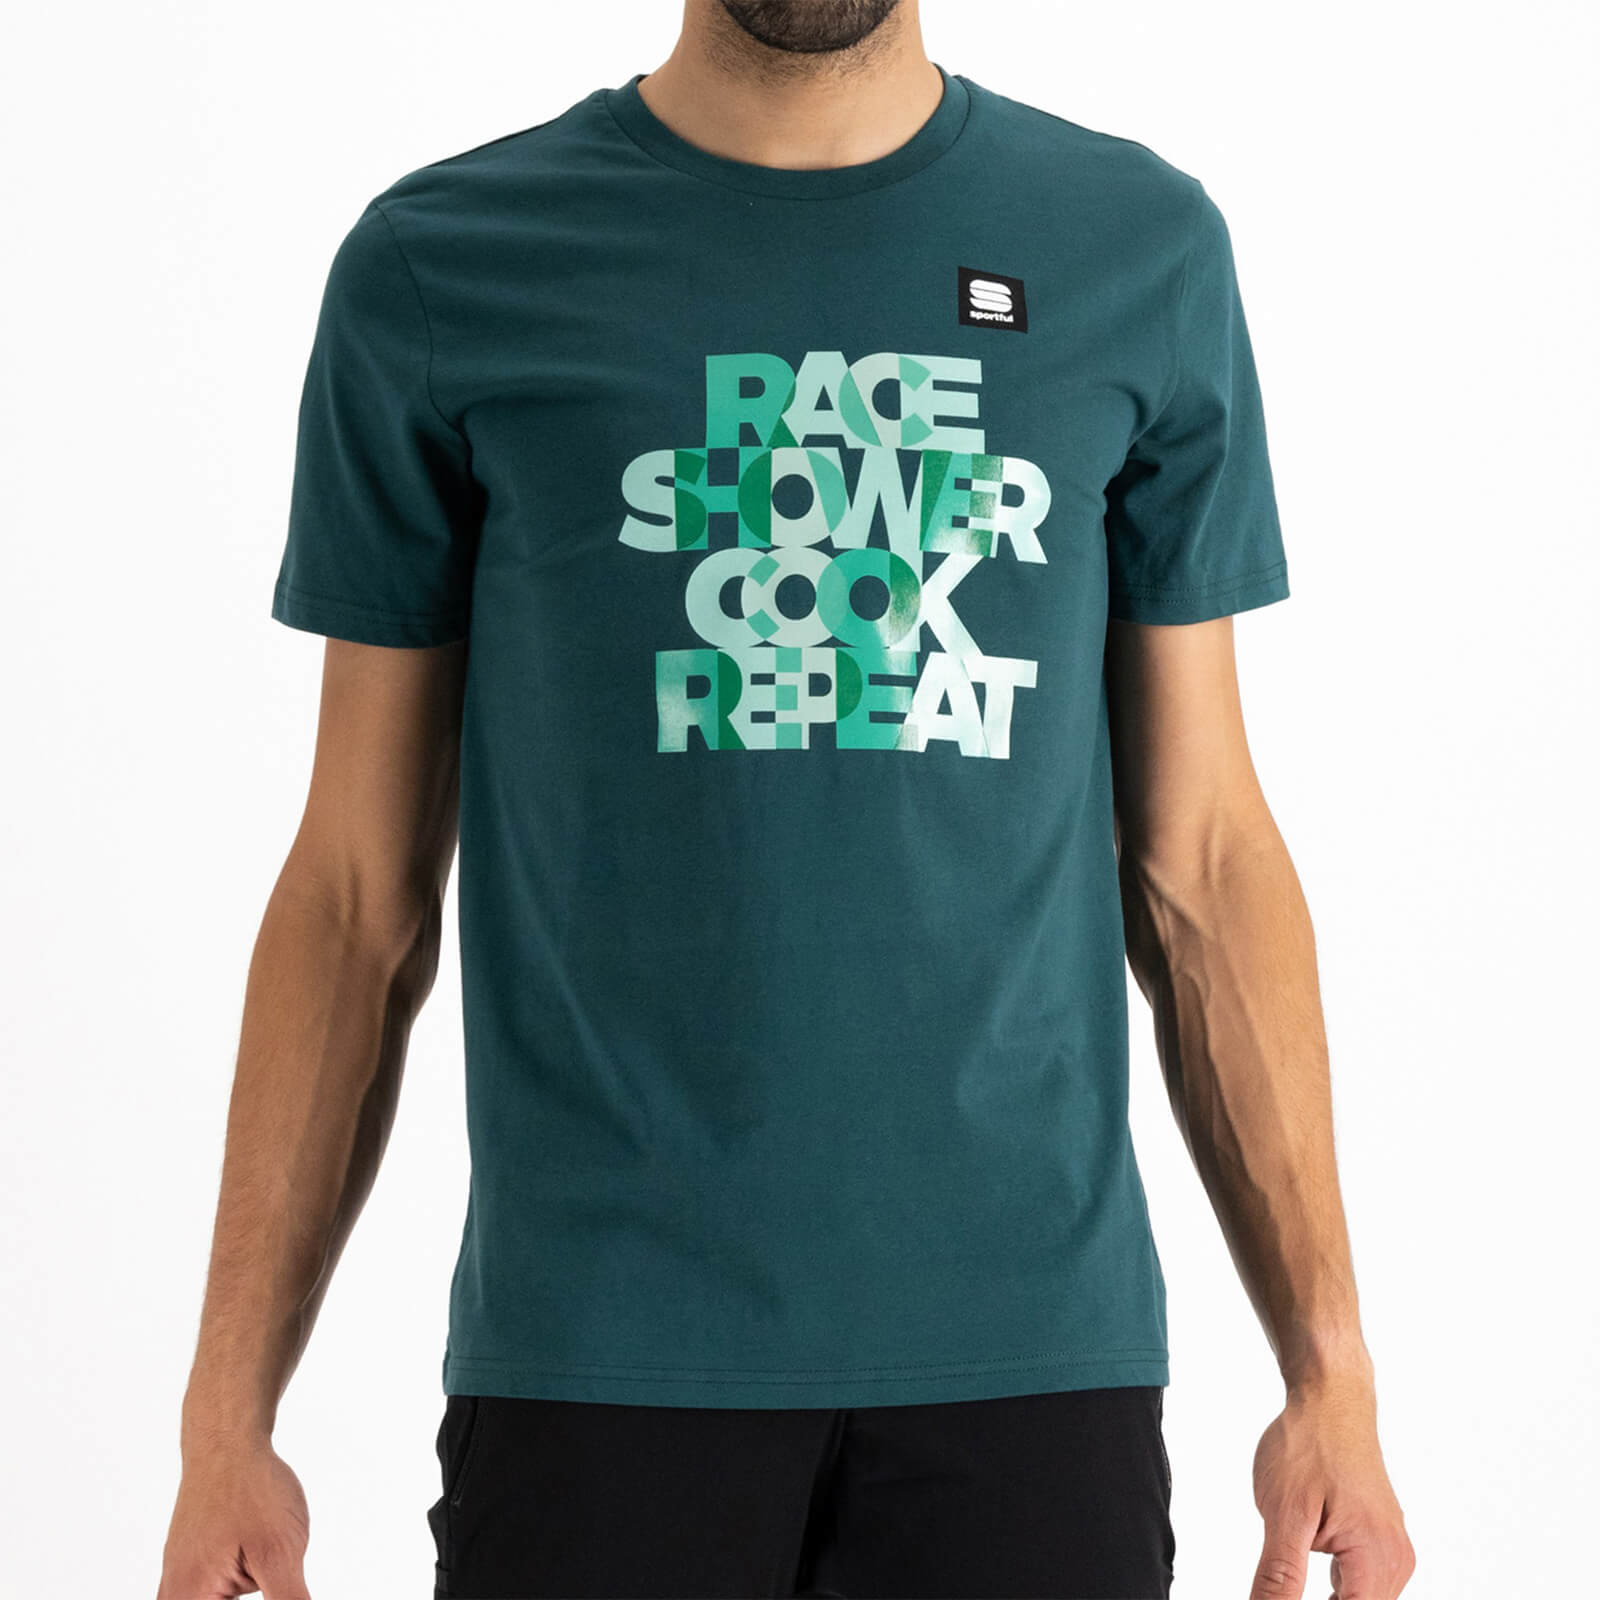 Sportful Bora Hansgrohe Race Shower Cook Repeat T-Shirt - XS